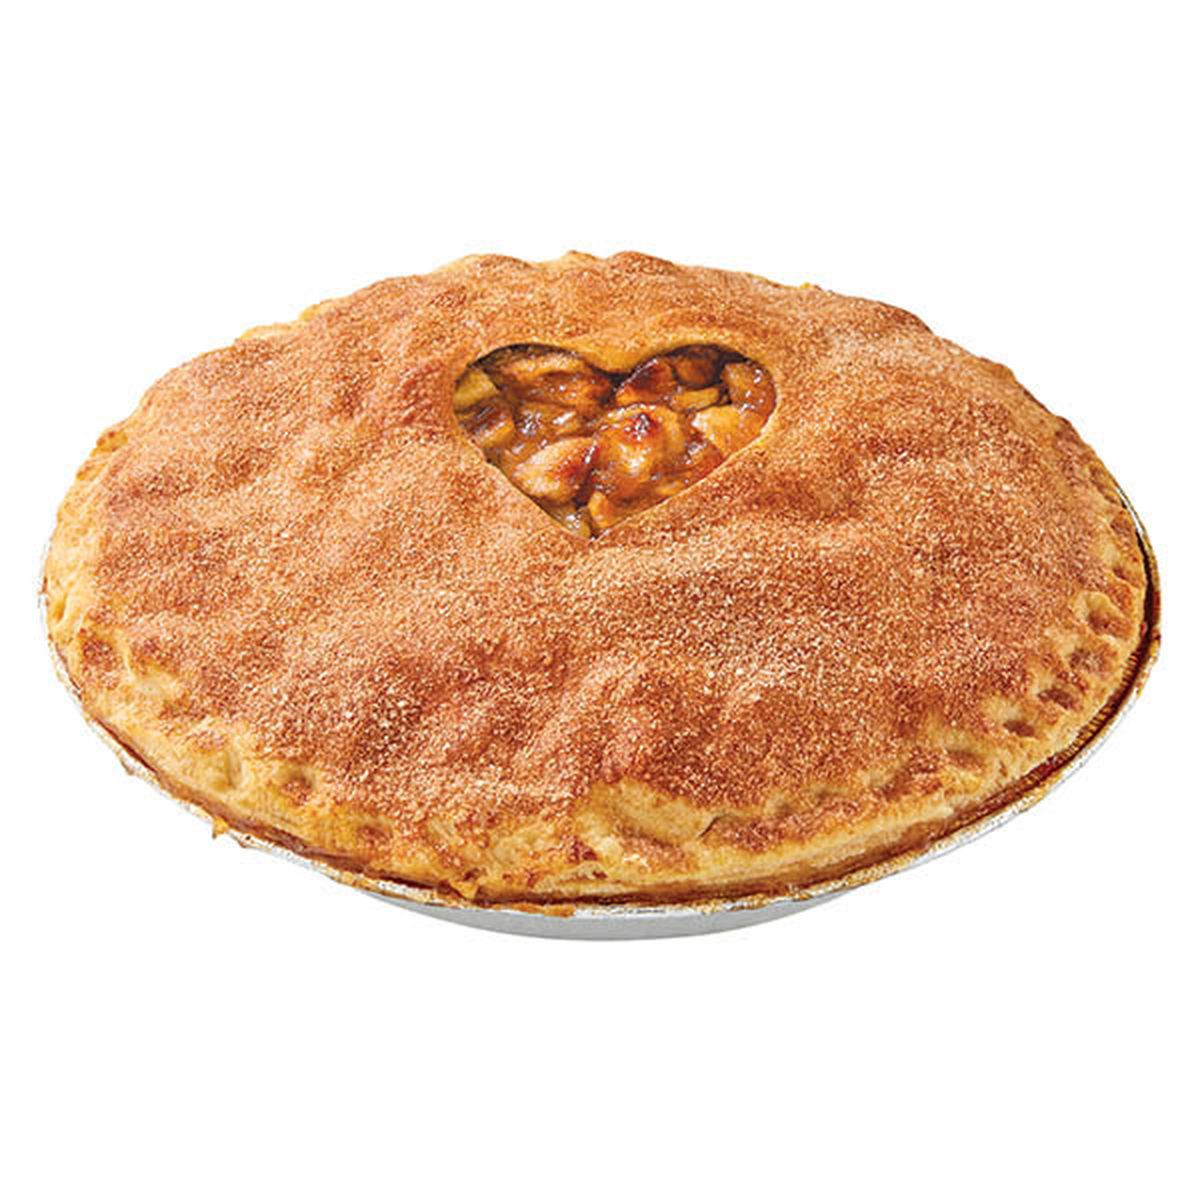 Calories in Wegmans Large Apple Pie